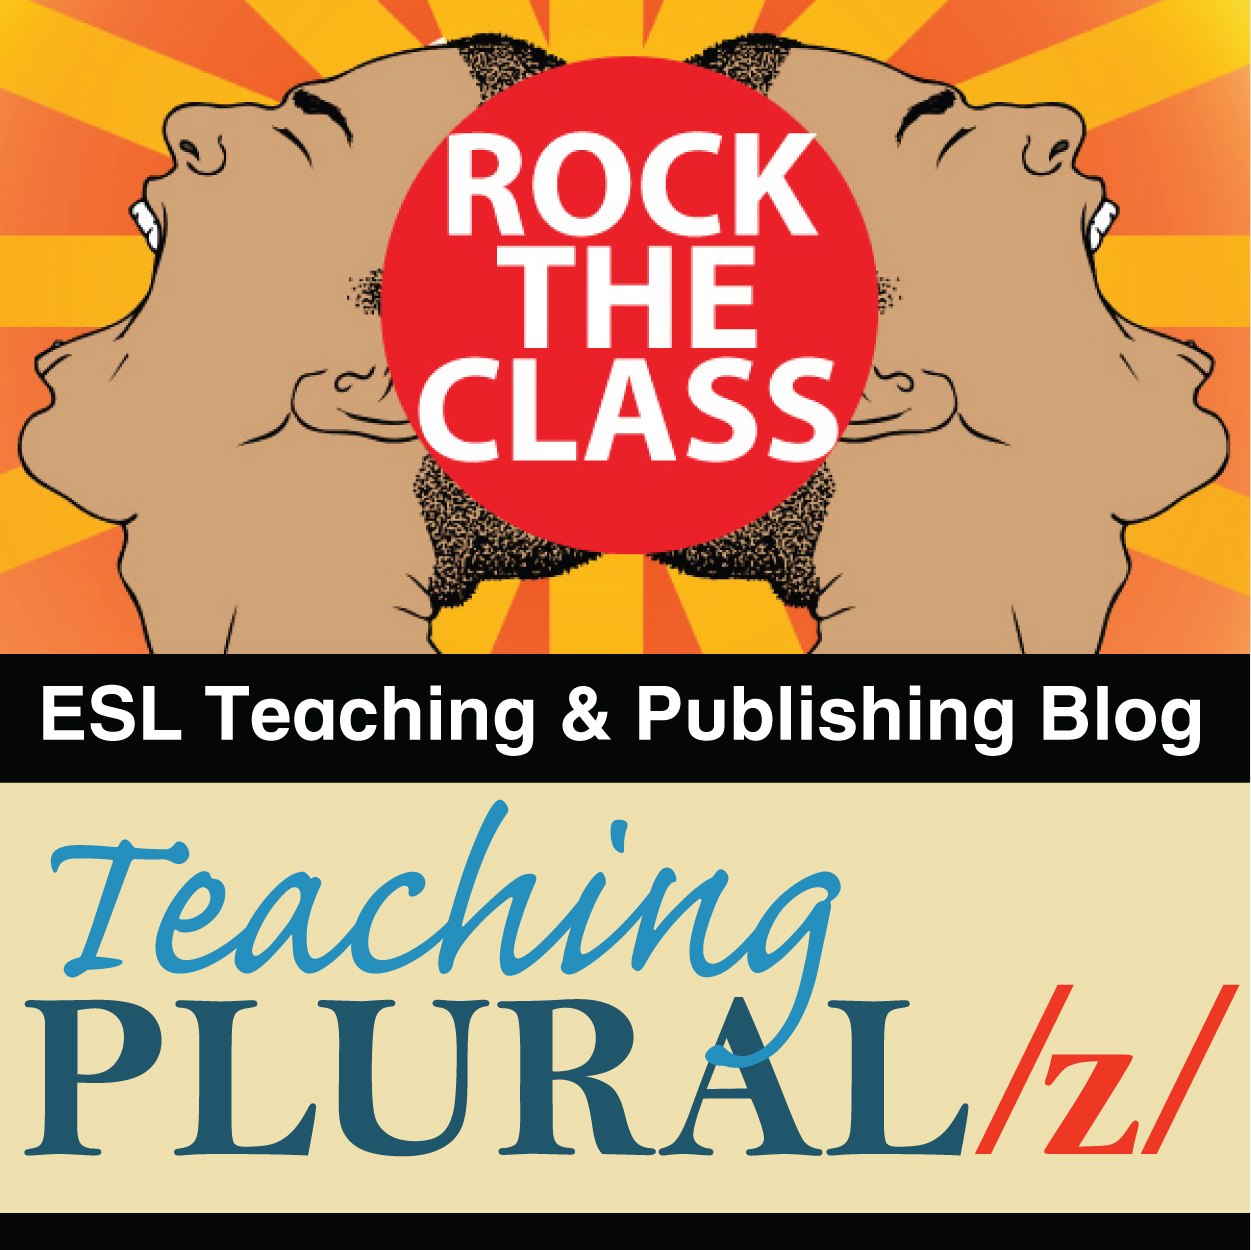 plurals-add-s-or-es-plurals-assessment-made-by-teachers